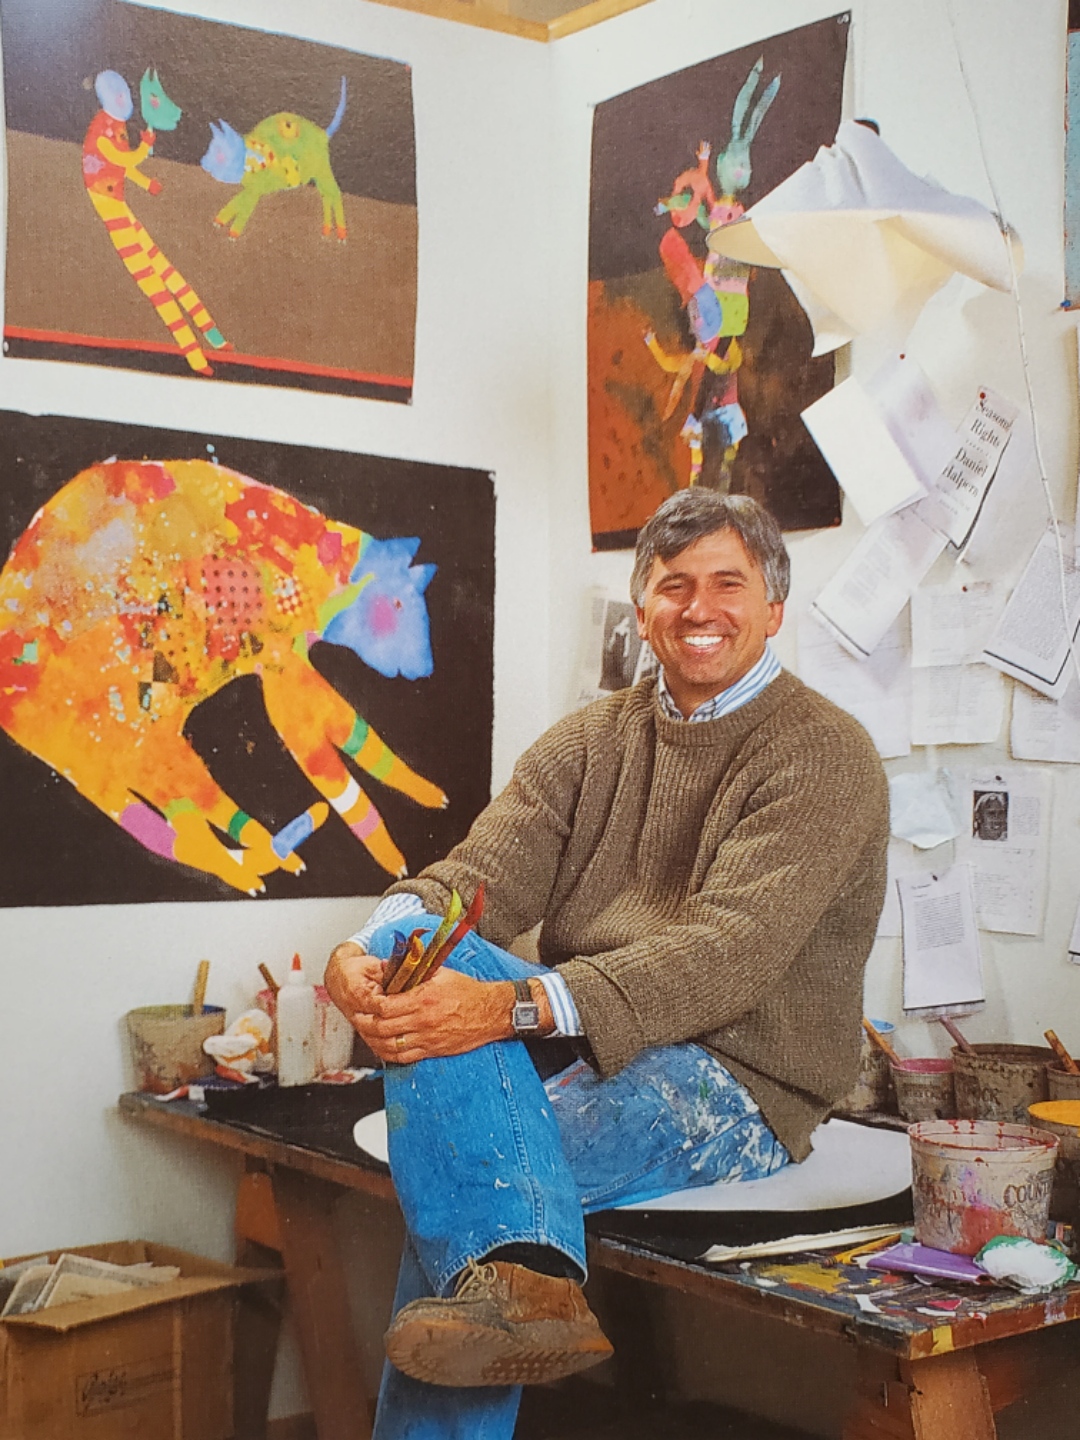 McGraw in his art studio